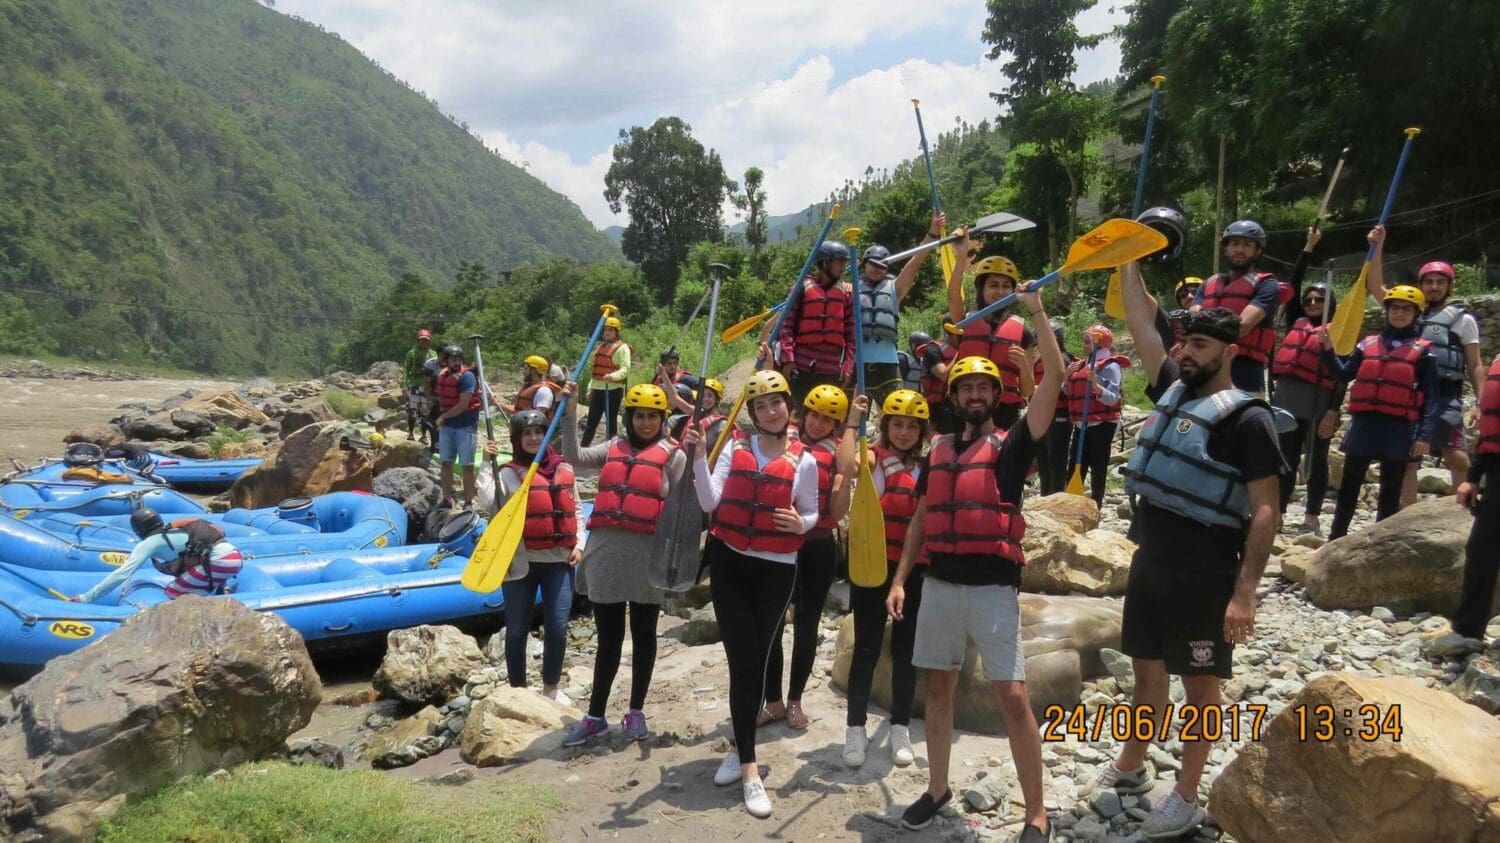 Nepal Volunteer group kayaking trip